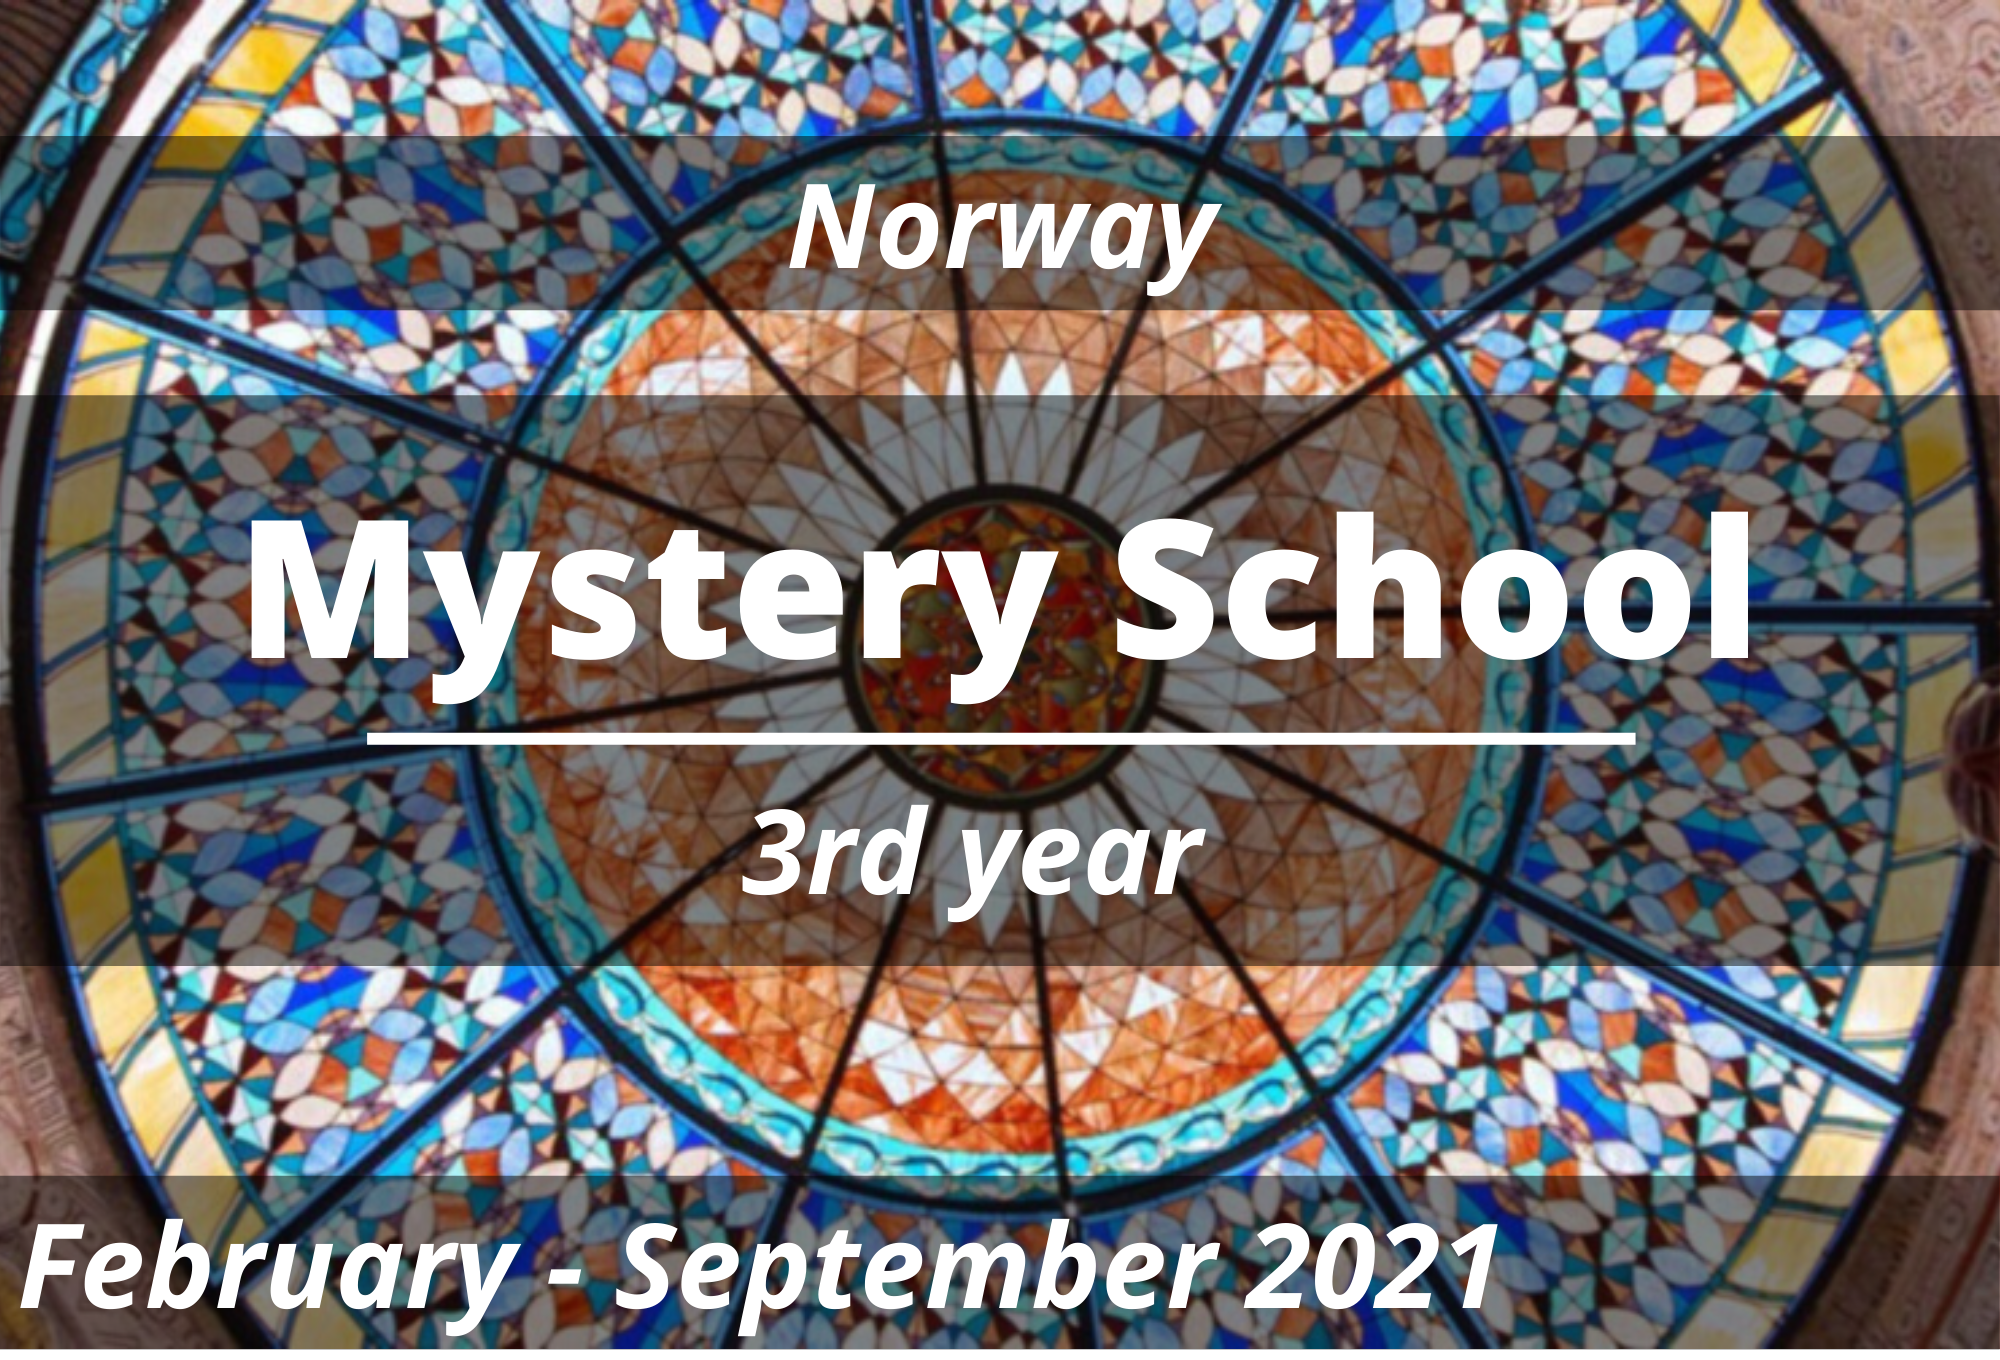 Mystery School Norway 2021, 3rd year